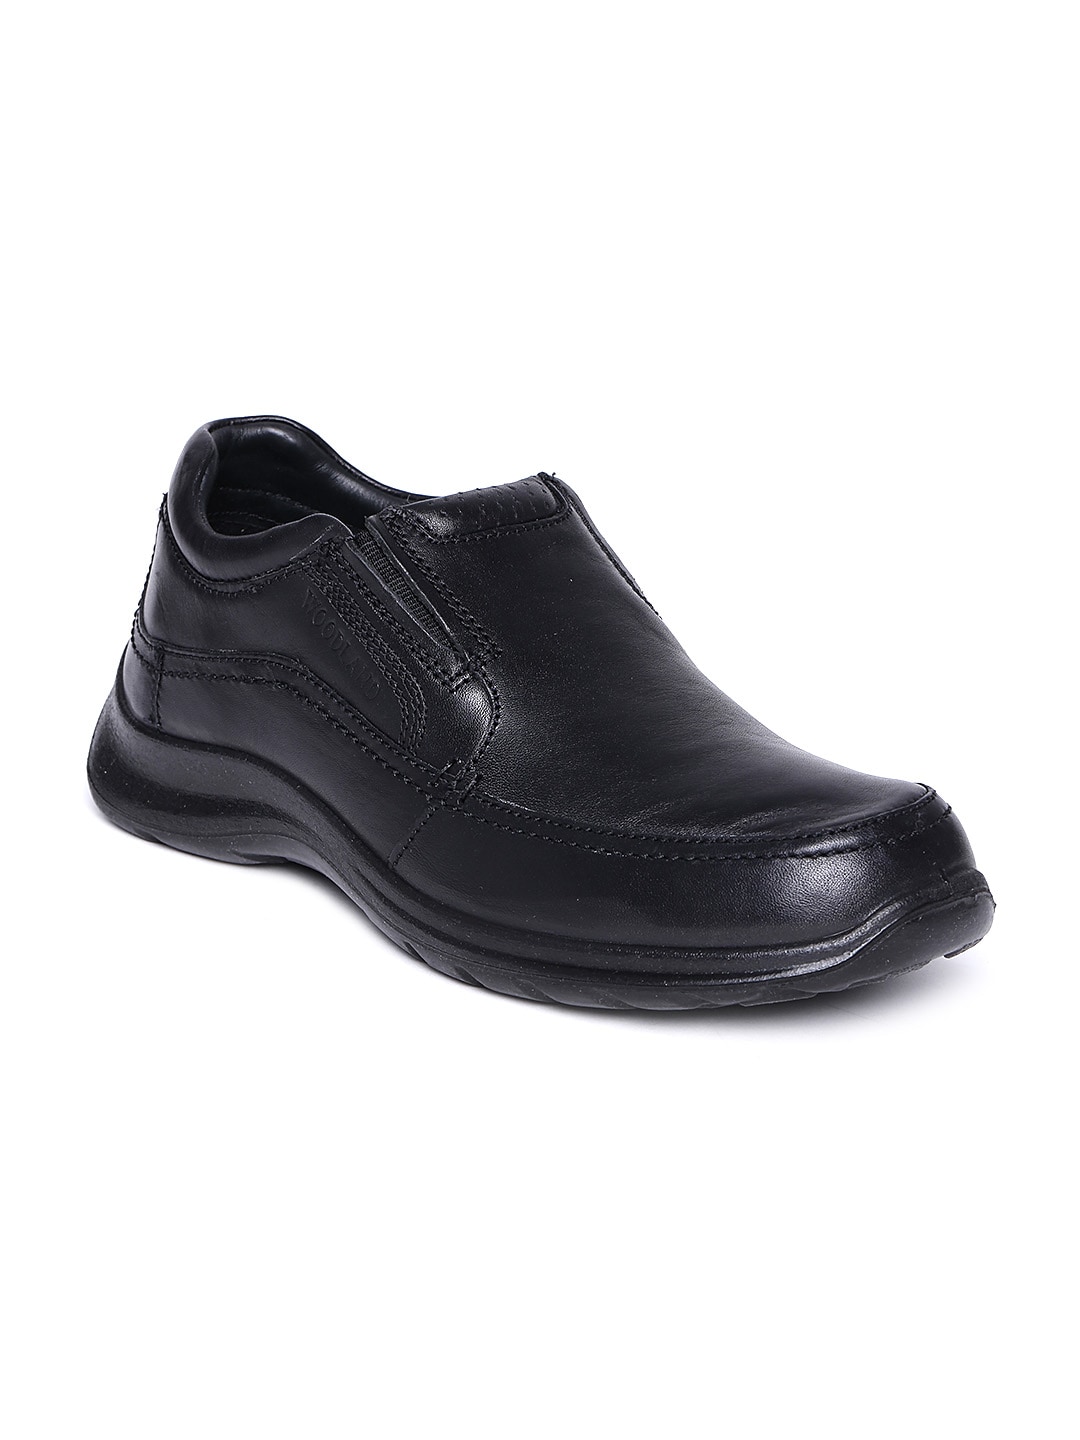 Buy Woodland Men Black Leather Casual Shoes - 632 - Footwear for Men ...